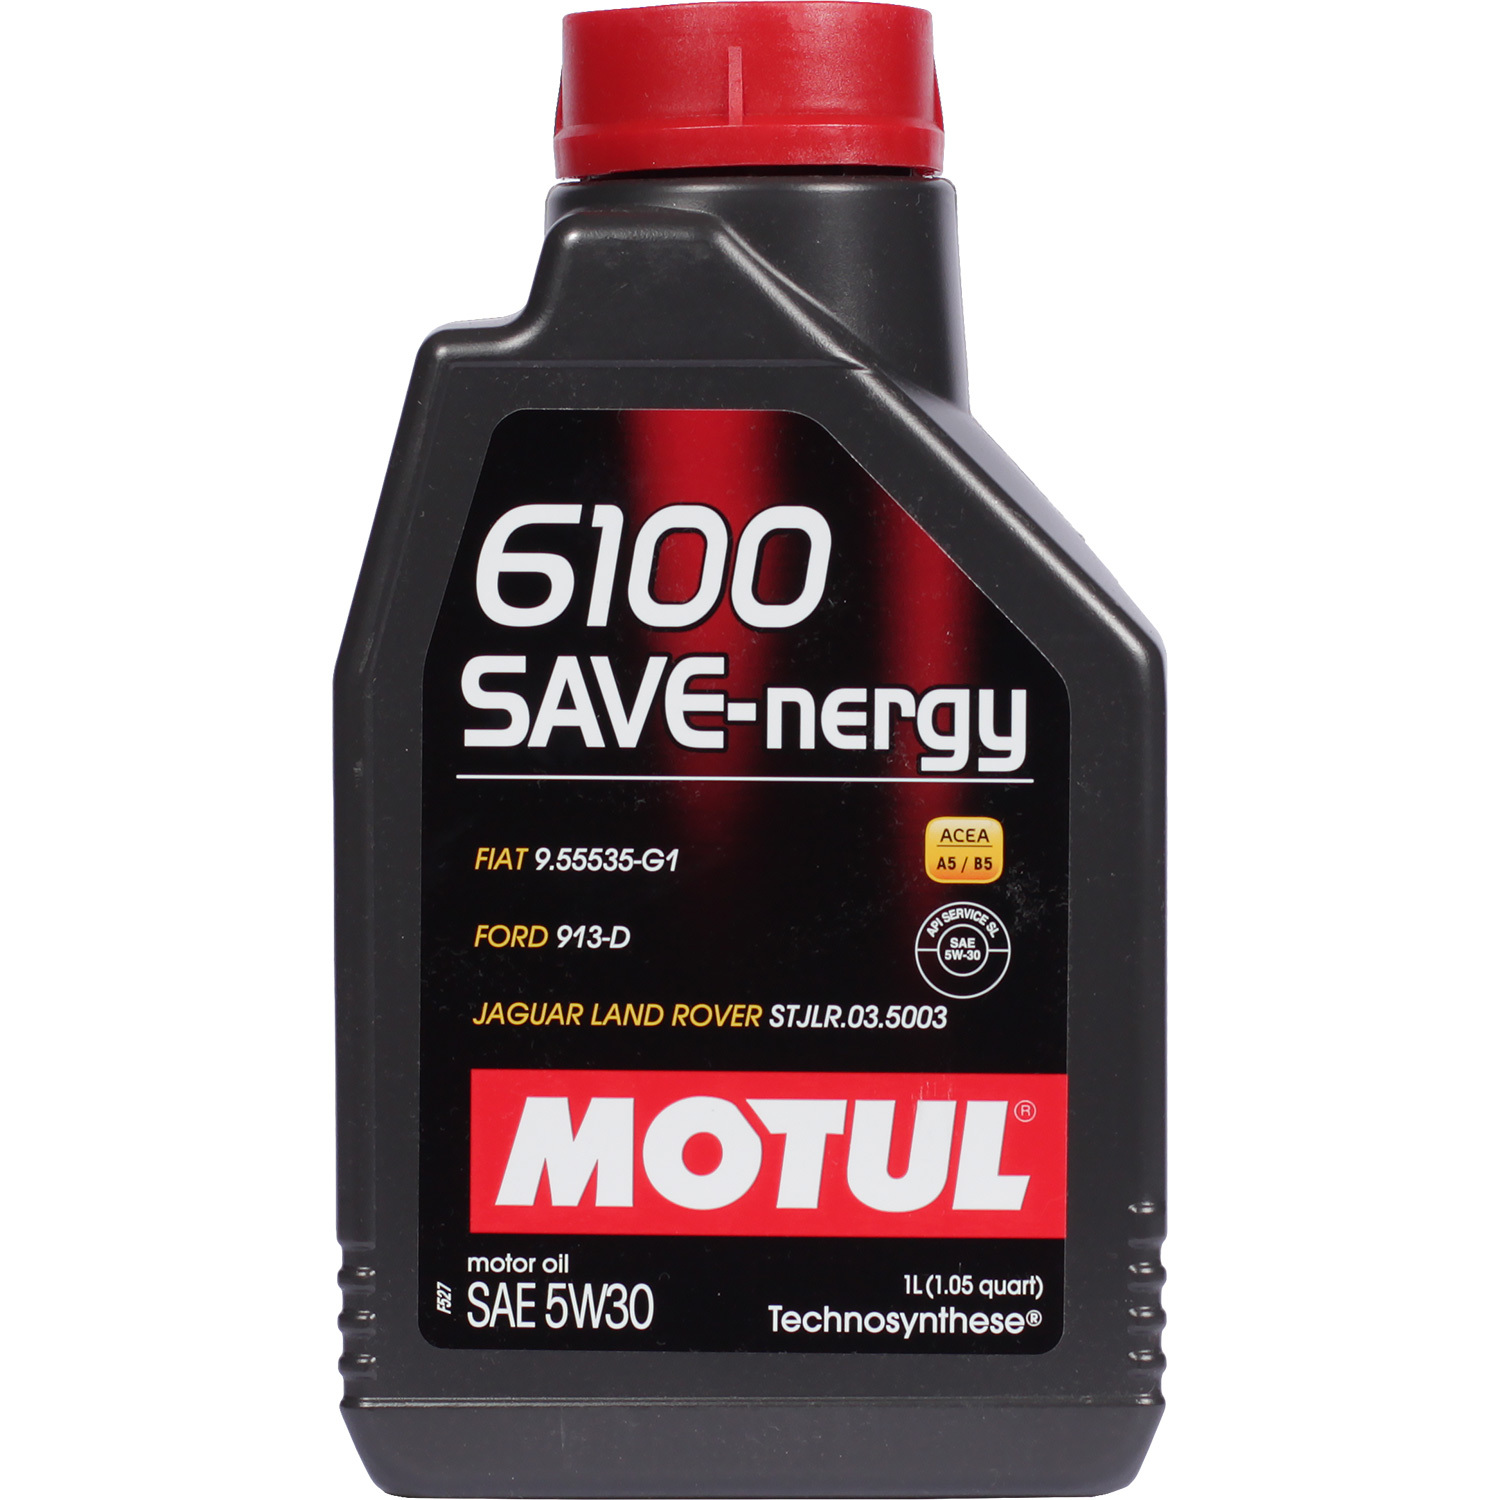 Motul Моторное масло Motul 6100 SAVE-NERGY 5W-30, 1 л motul моторное масло motul 6100 synclean 5w 40 5 л